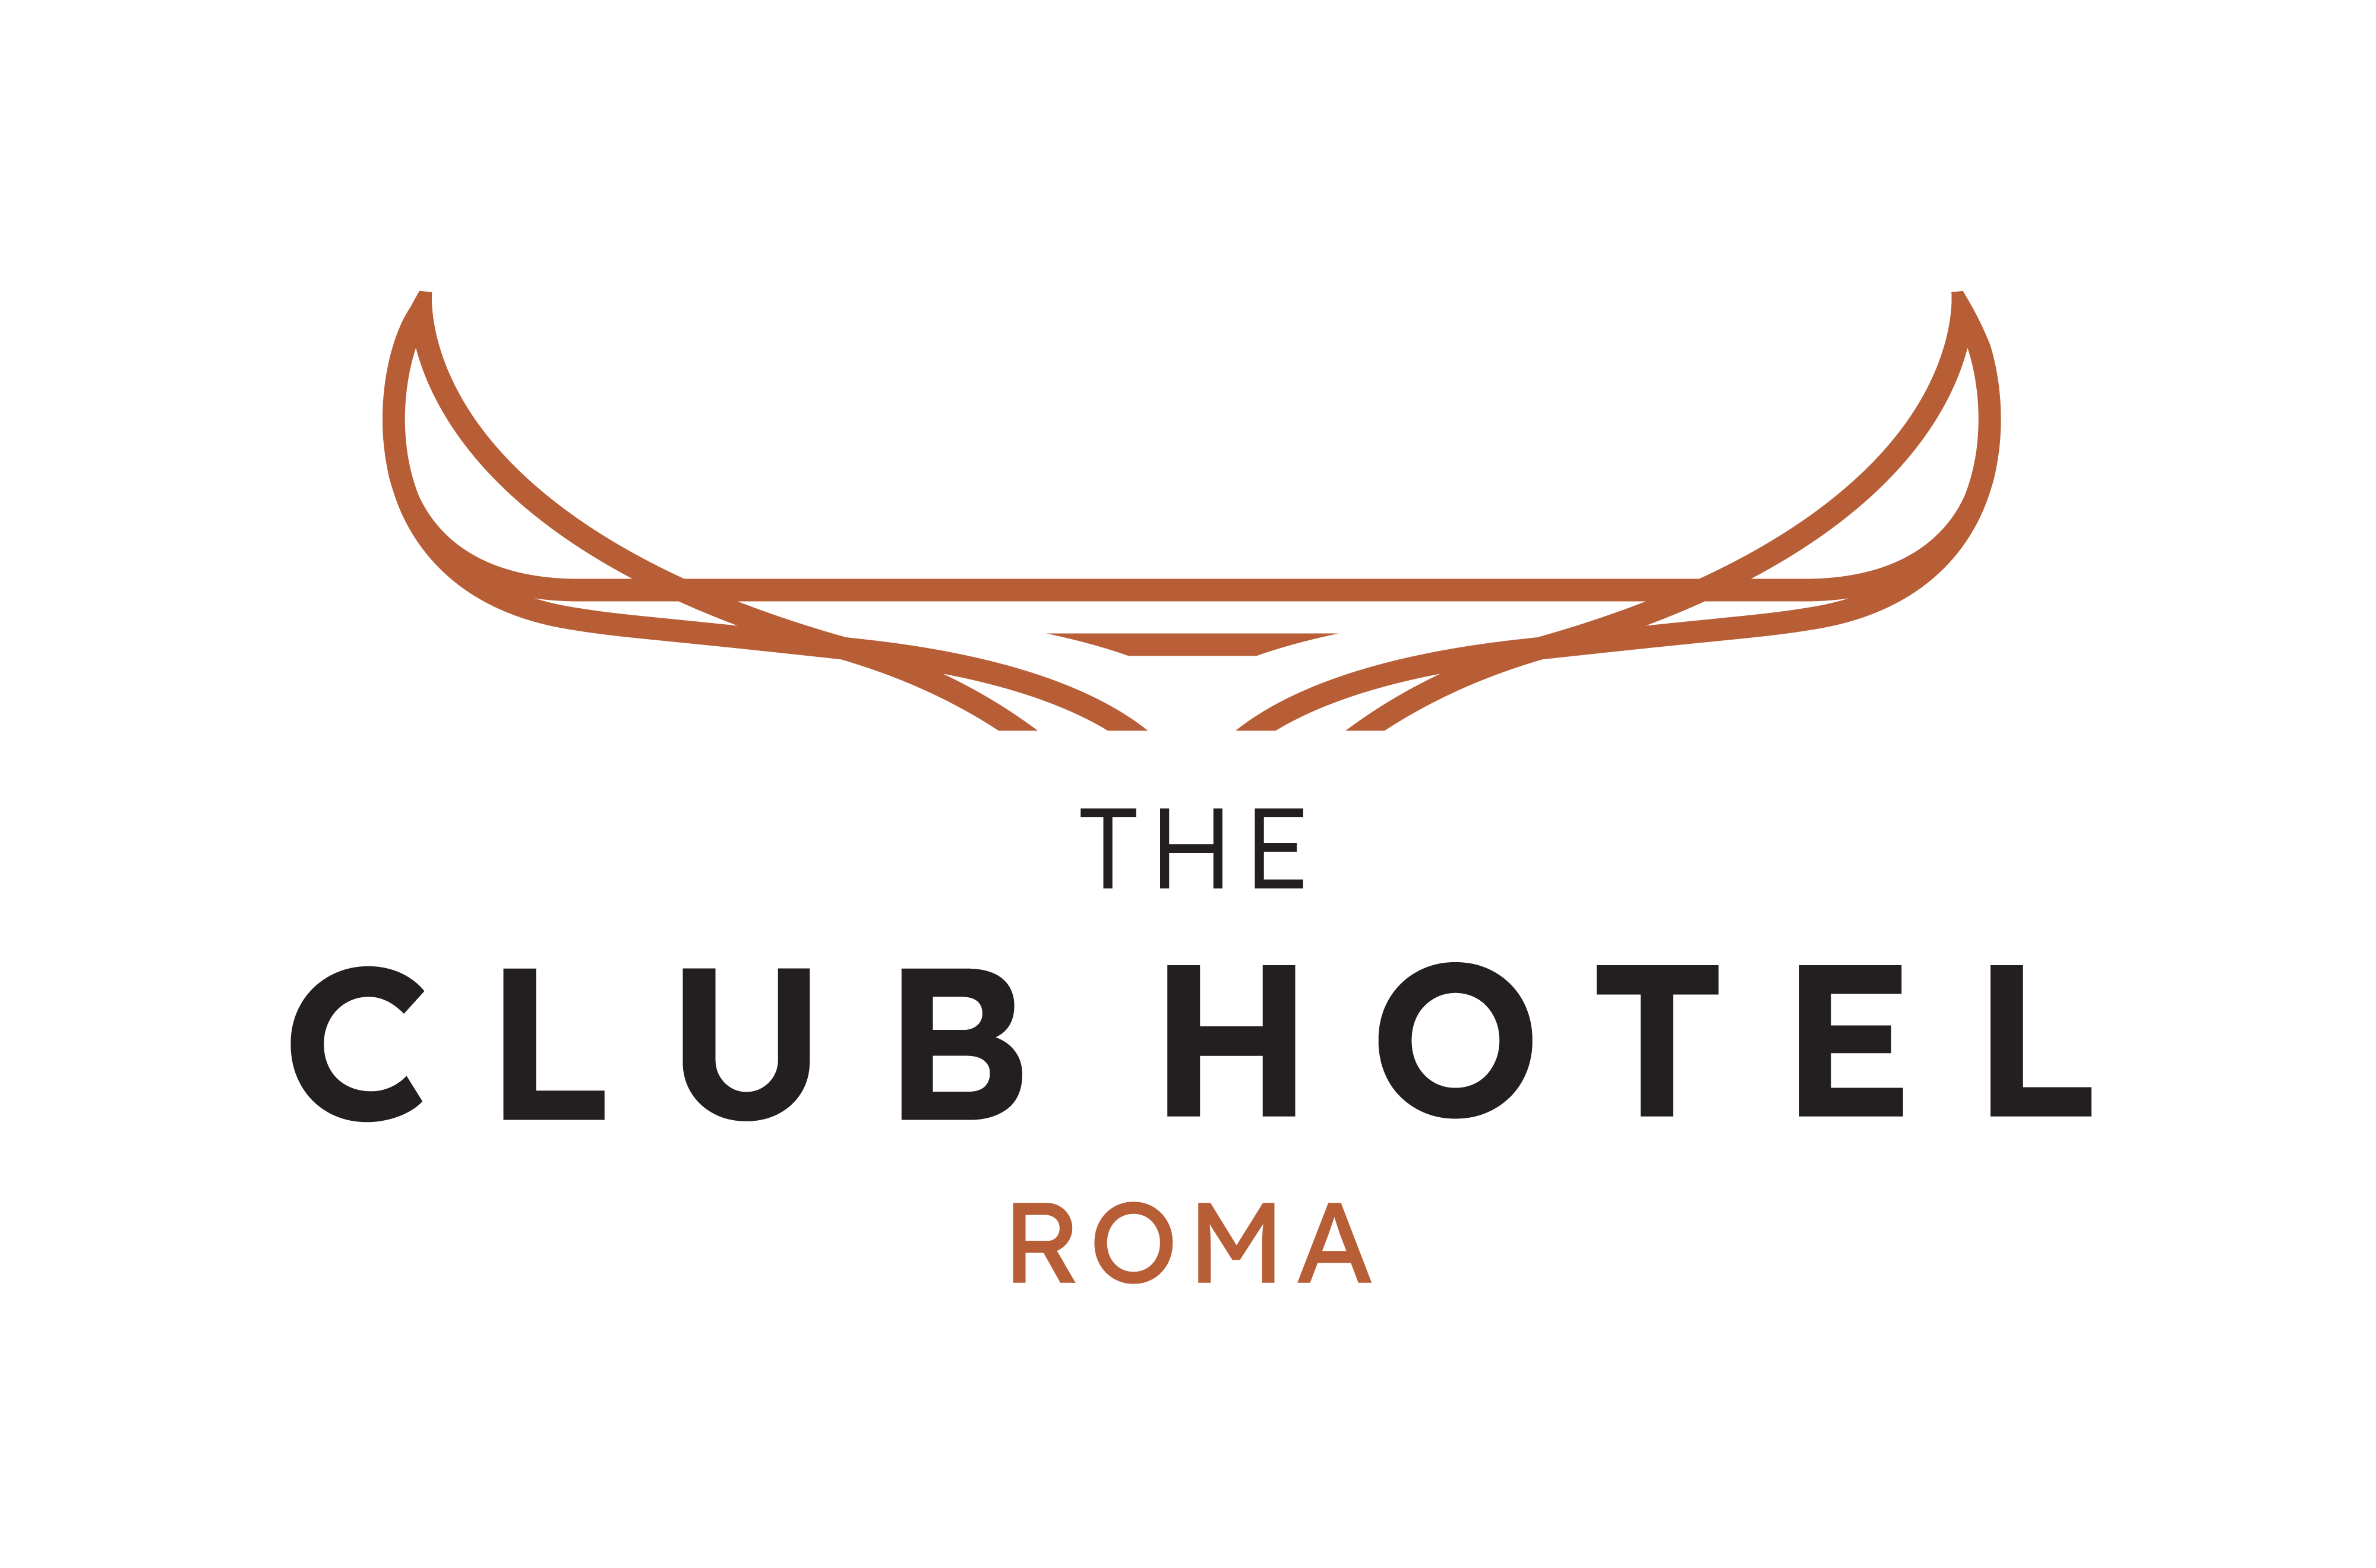 The Club Hotel Roma